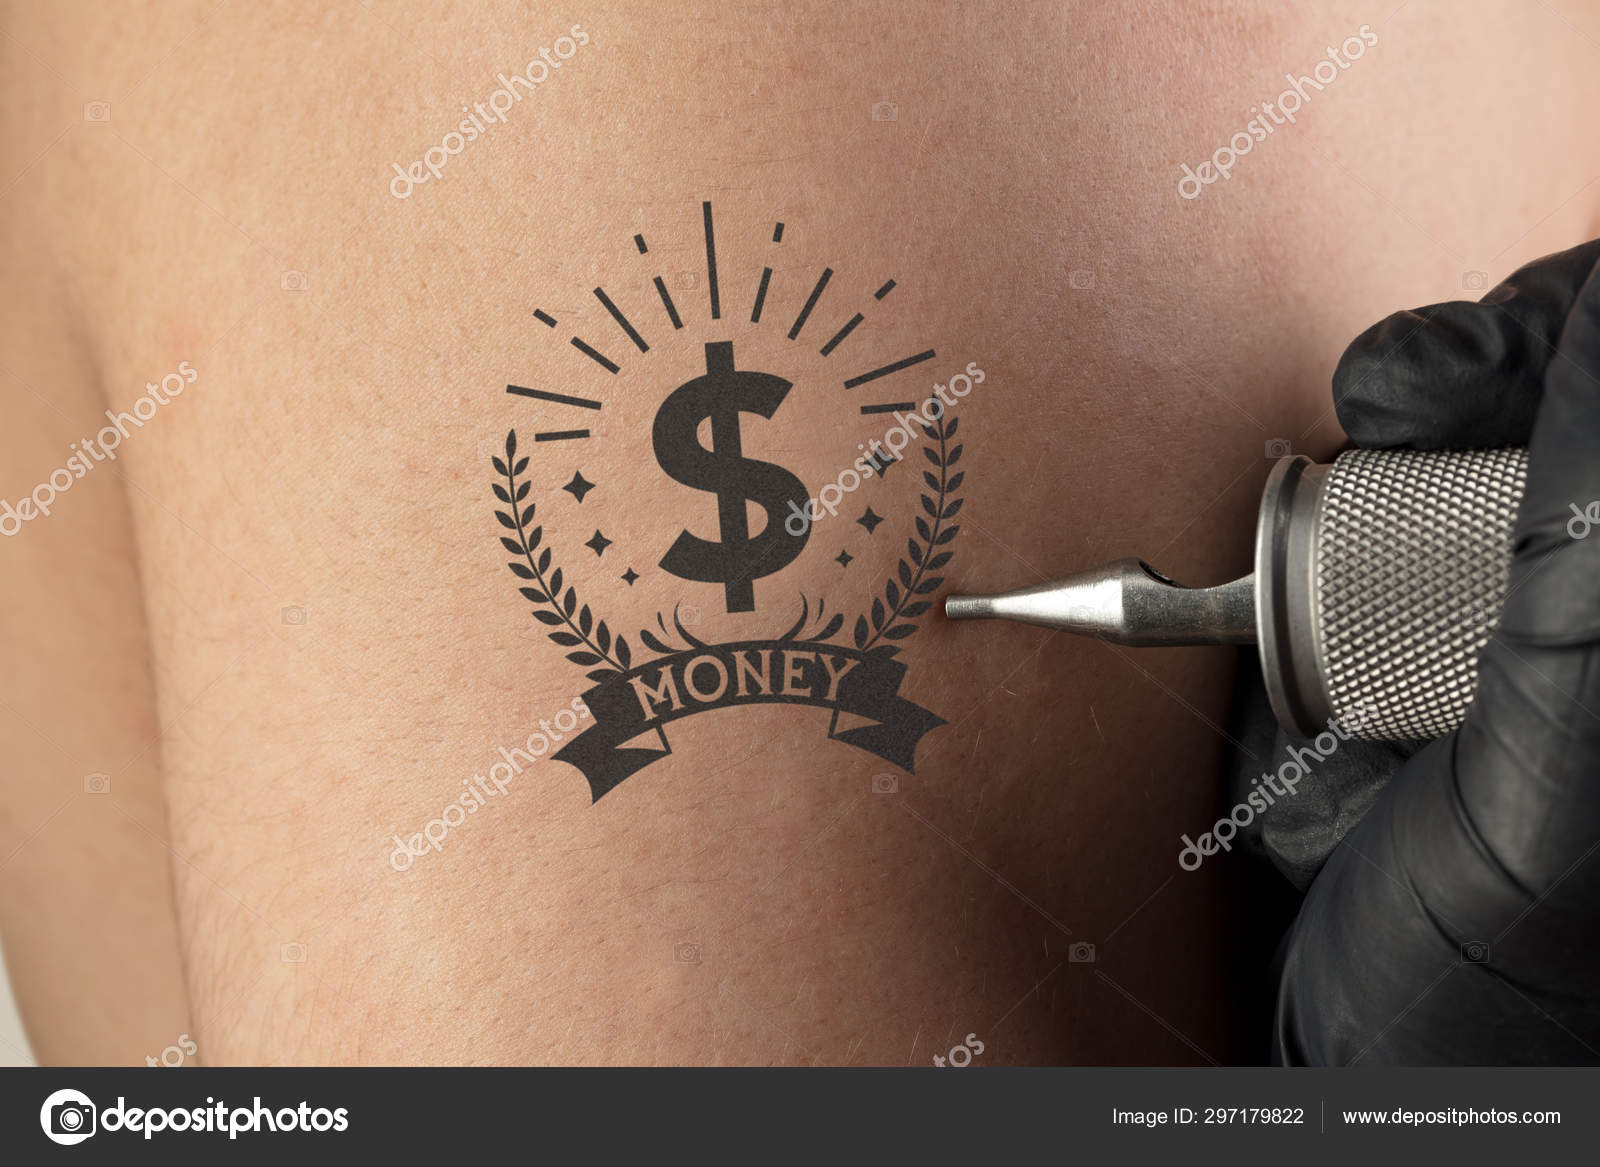 32 Trending Money Bag Tattoo Designs Ideas To Be Cool - Mycozylive.com |  Money bag tattoo, Money tattoo, Respect tattoo